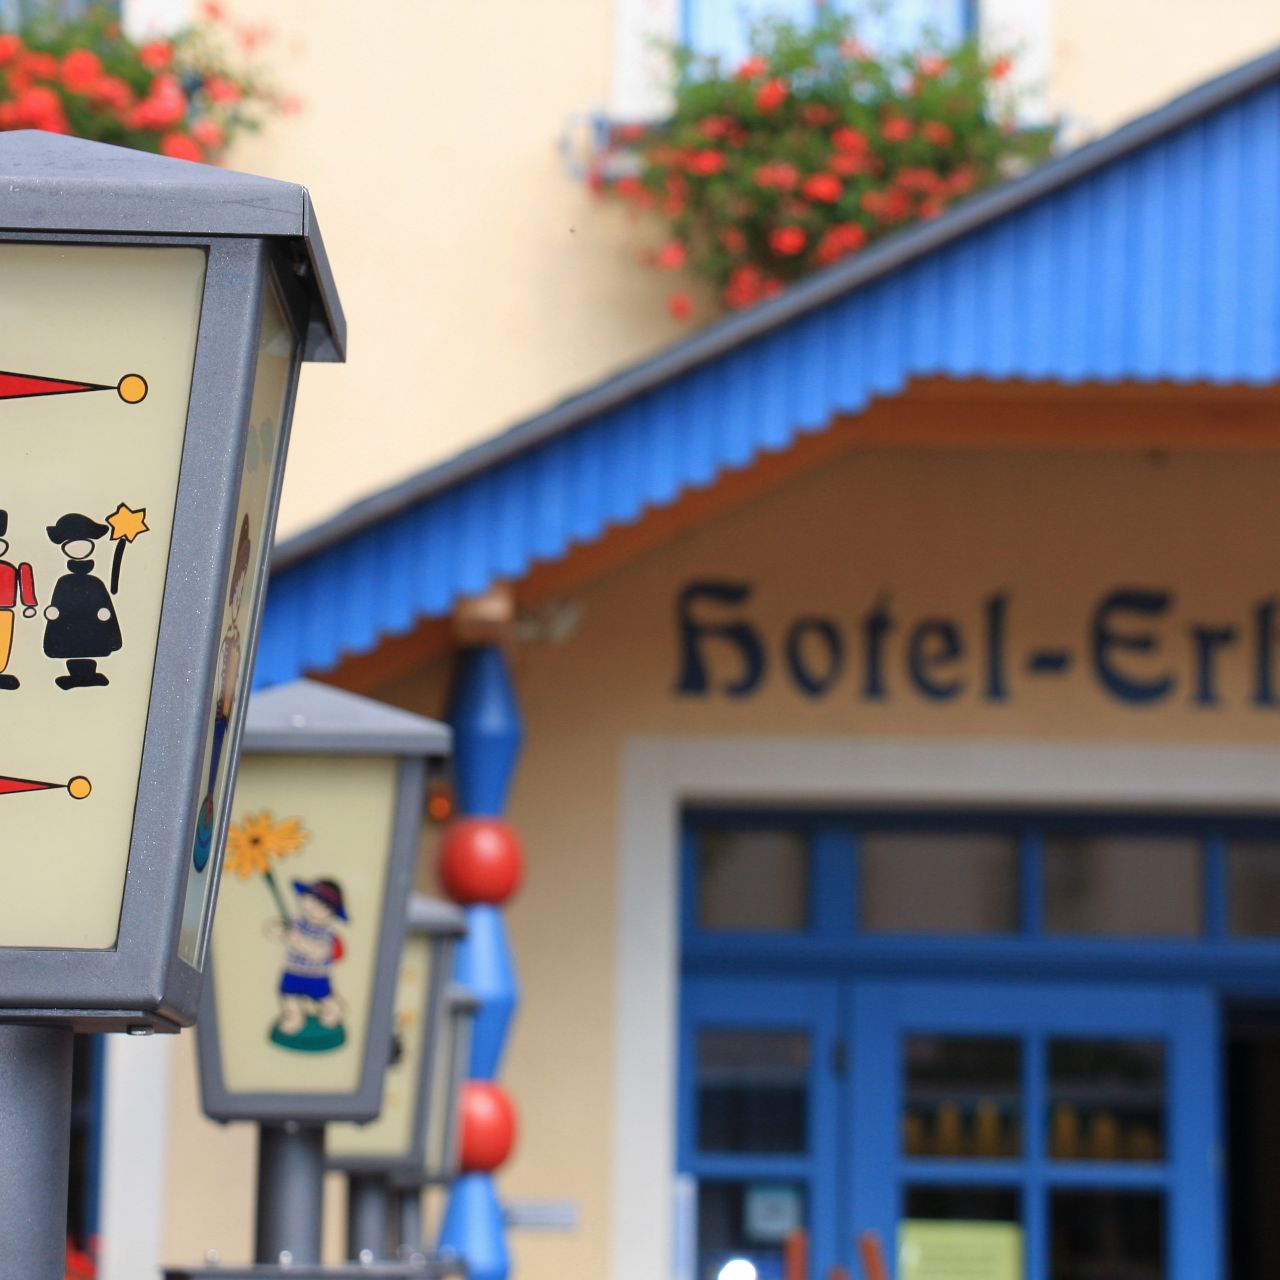 Erbgericht Buntes Haus in Seiffen/Erzgebirge - HOTEL DE